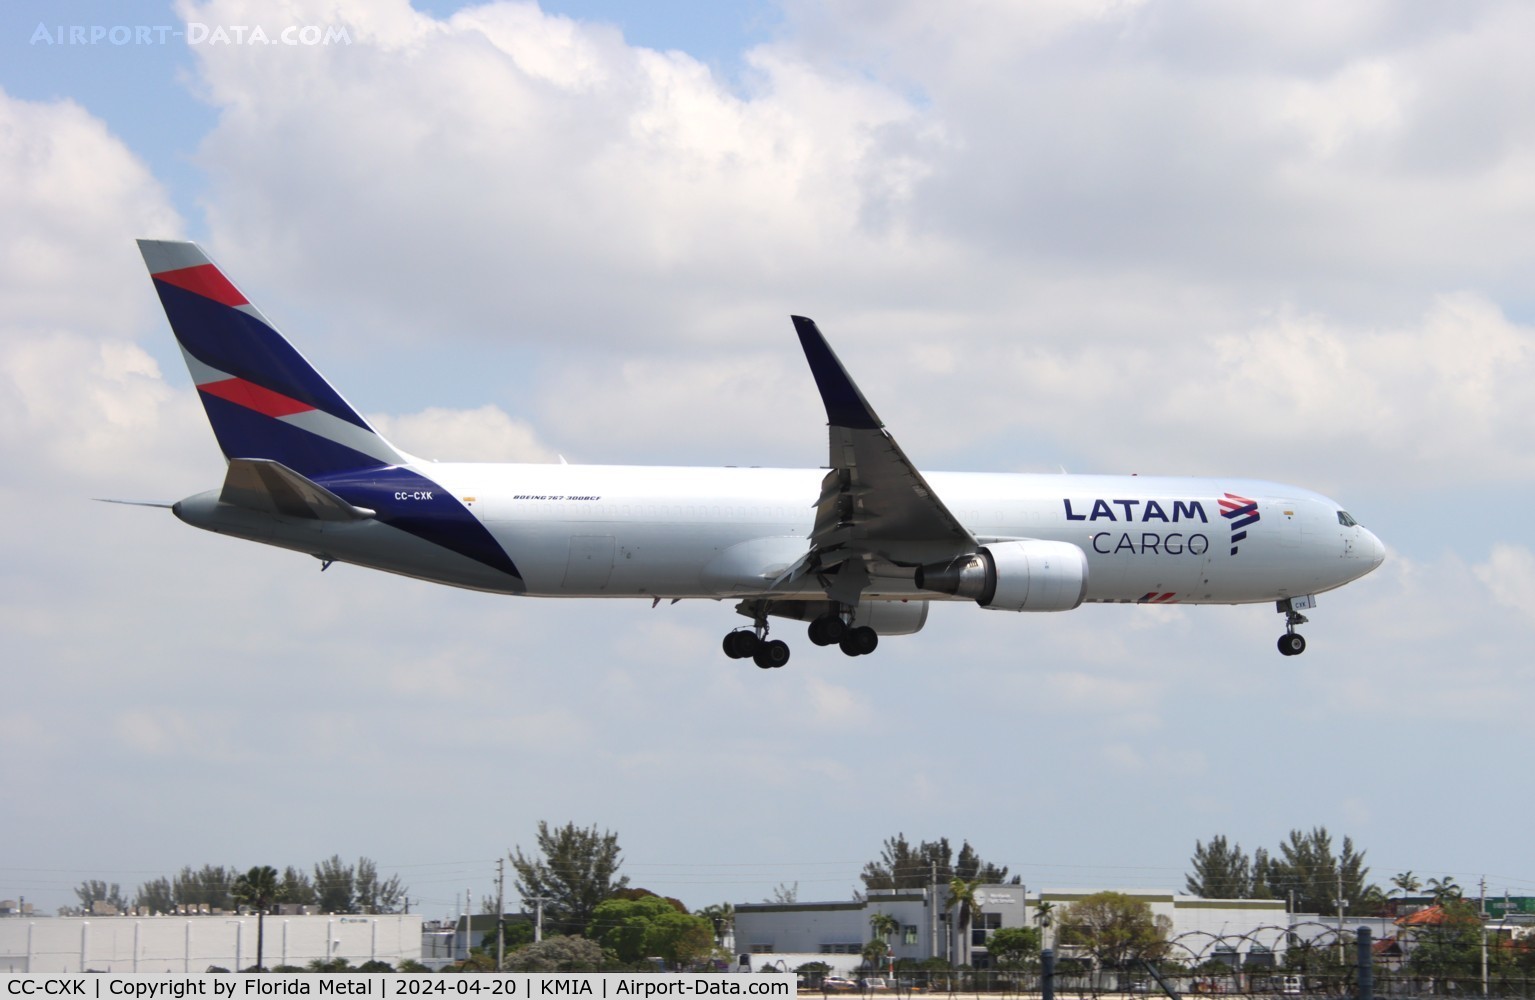 CC-CXK, 2010 Boeing 767-316/ER C/N 37802, LATAM Cargo 767-300F zx SJO /MROC - MIA arriving from San Jose Costa Rica